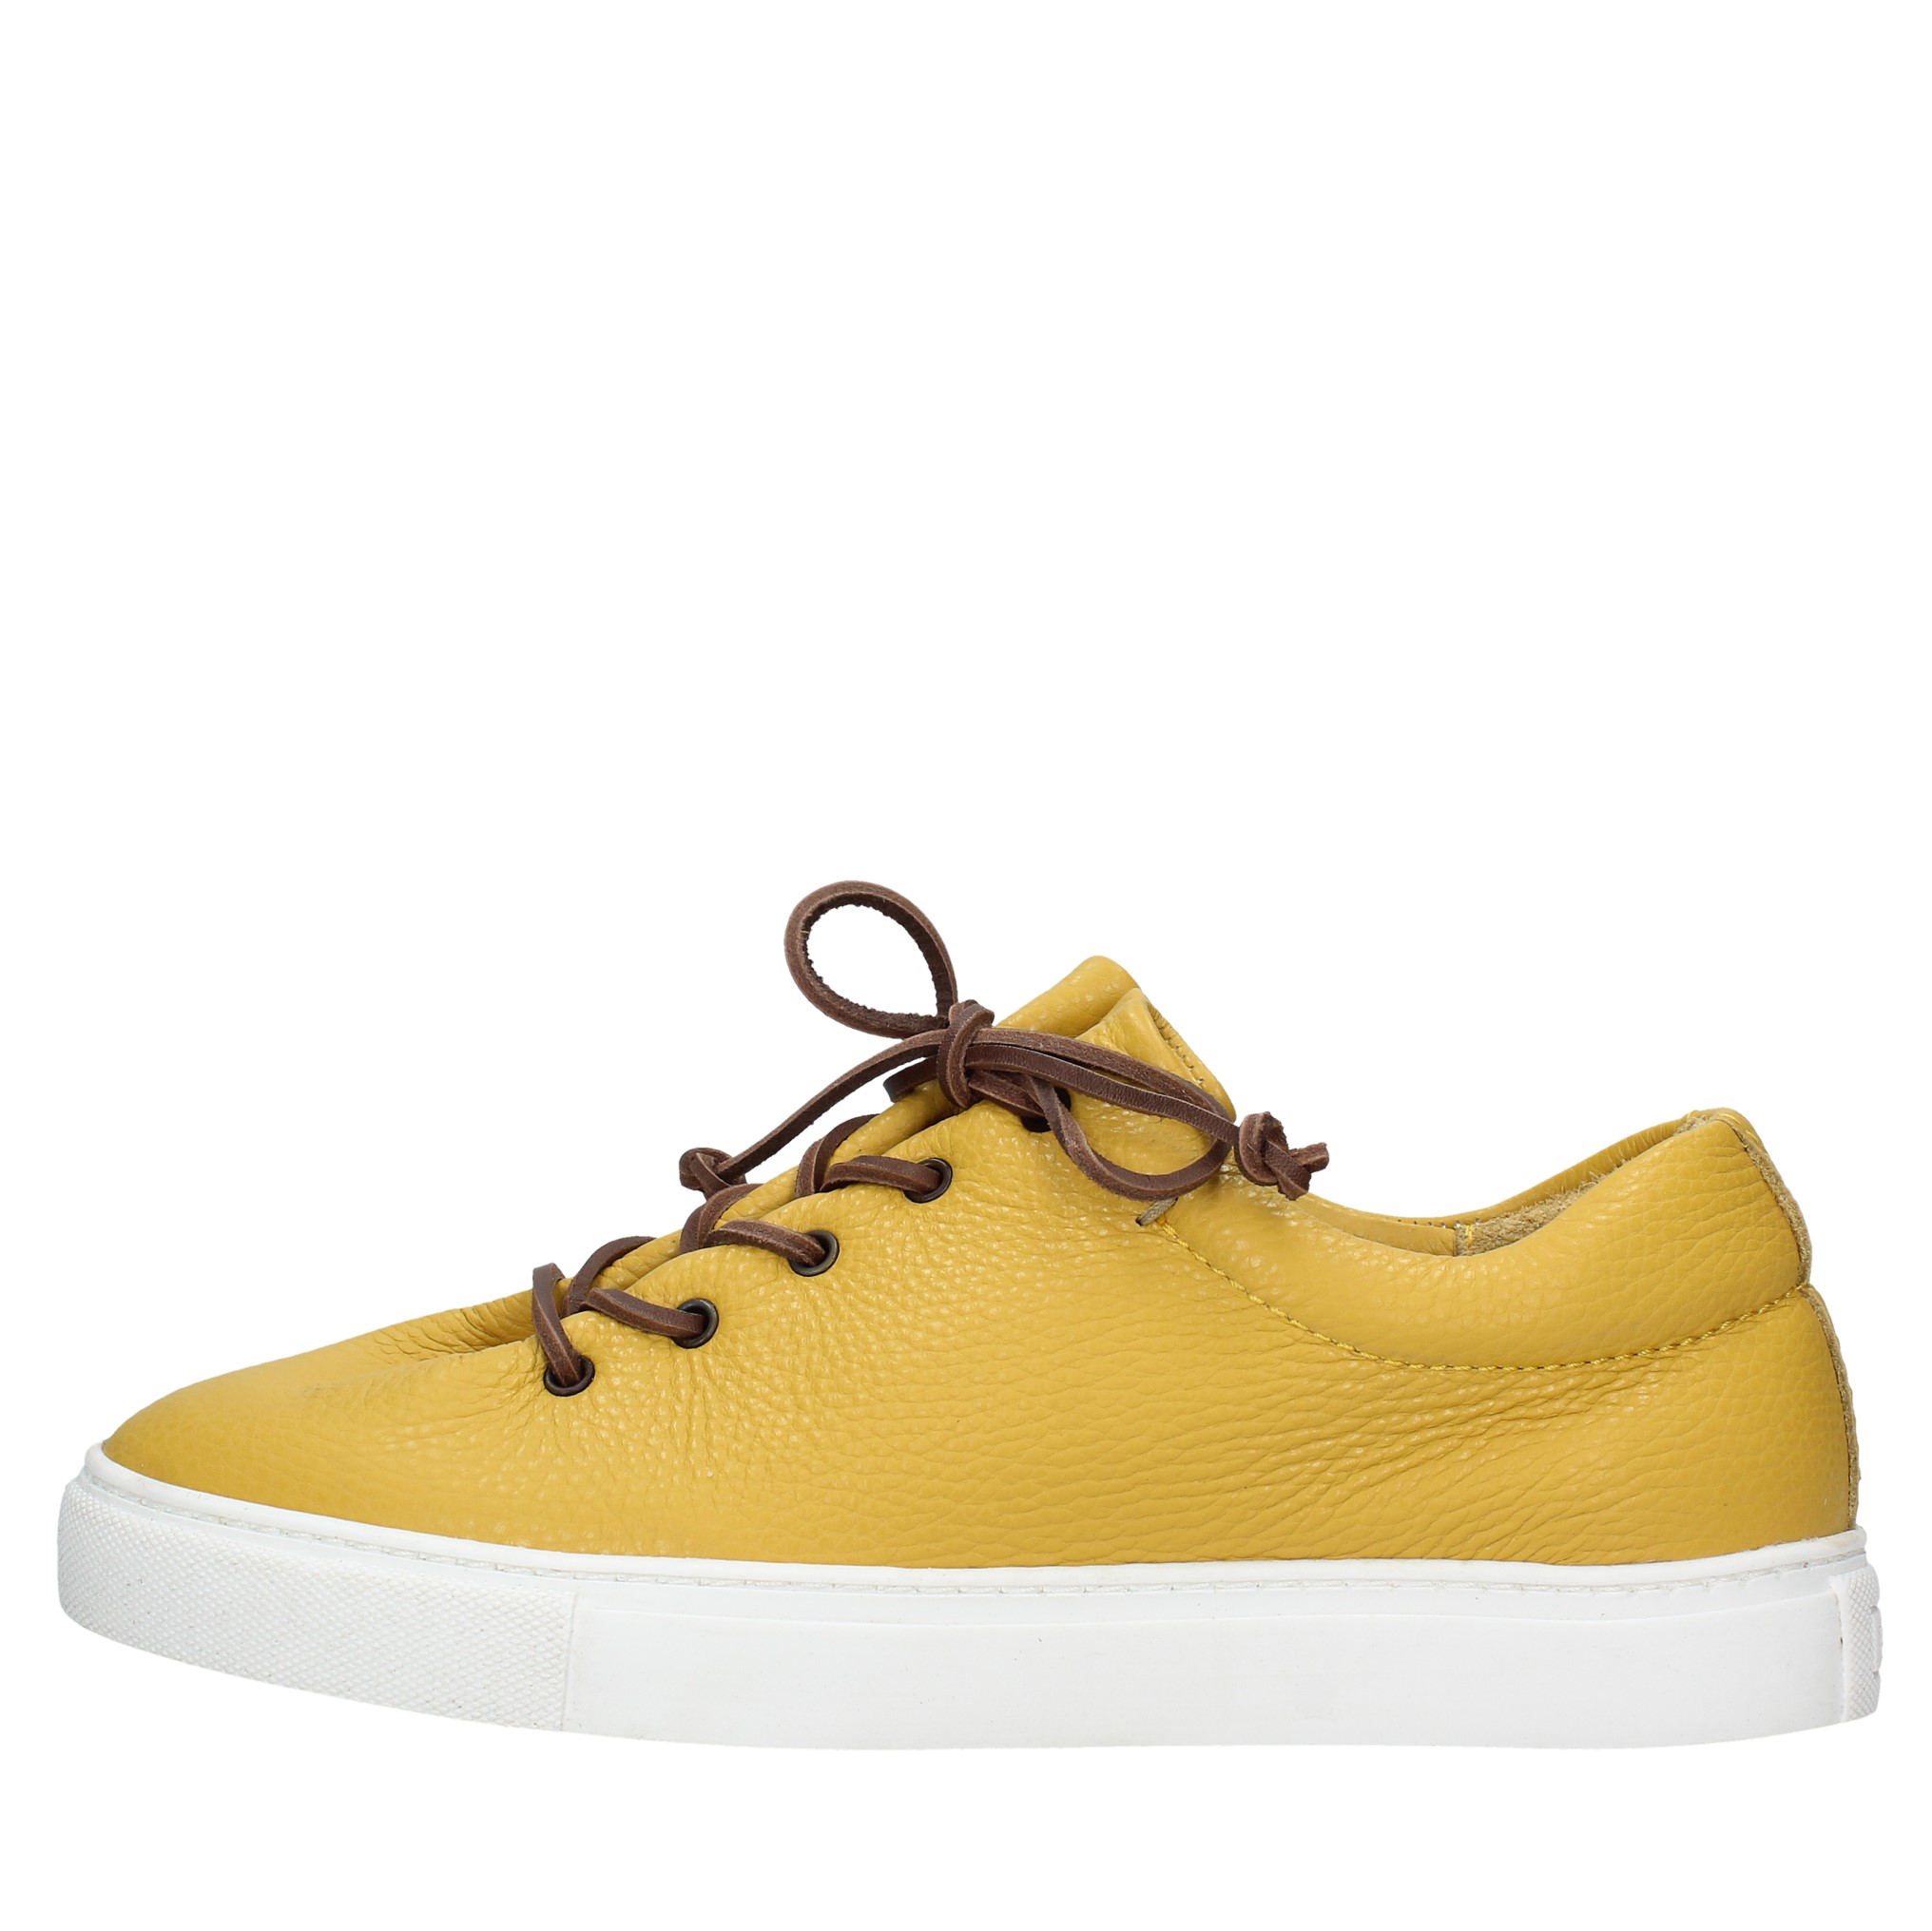 Trainers Yellow - KJORE PROJECT - Ginevra calzature